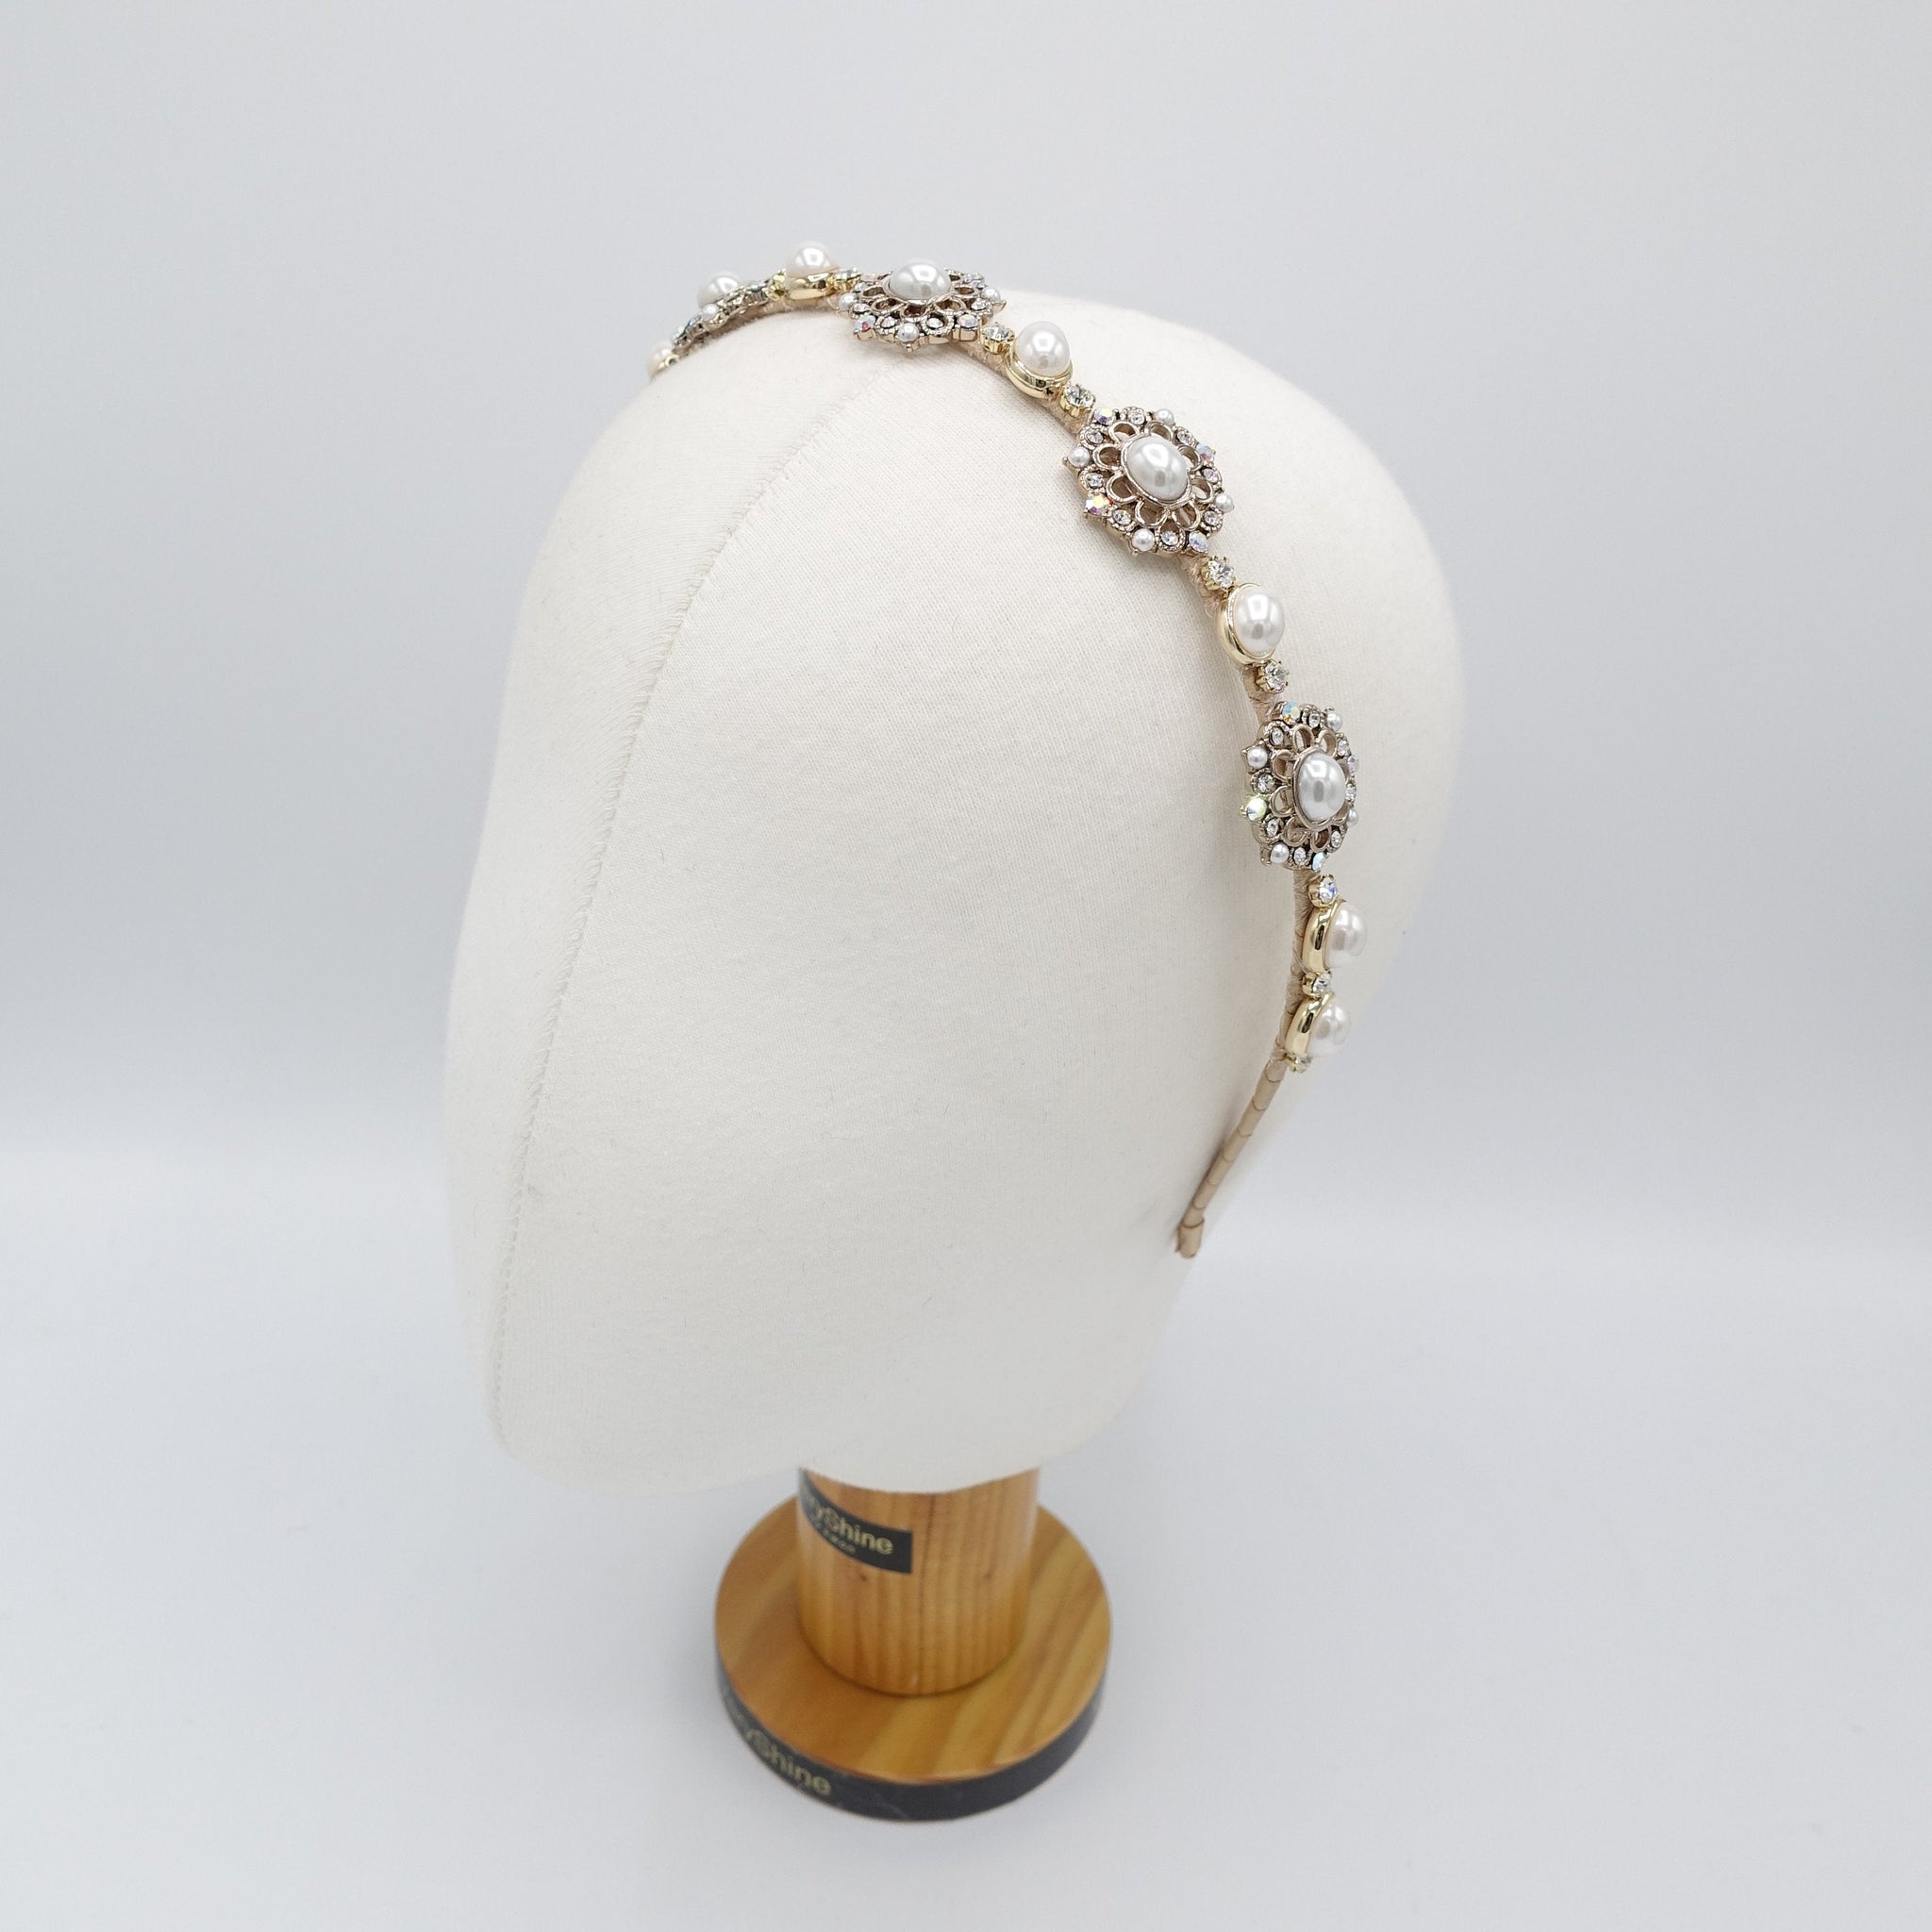 VeryShine classic pearl rhinestone headband baroque pattern antique hair accessory for women